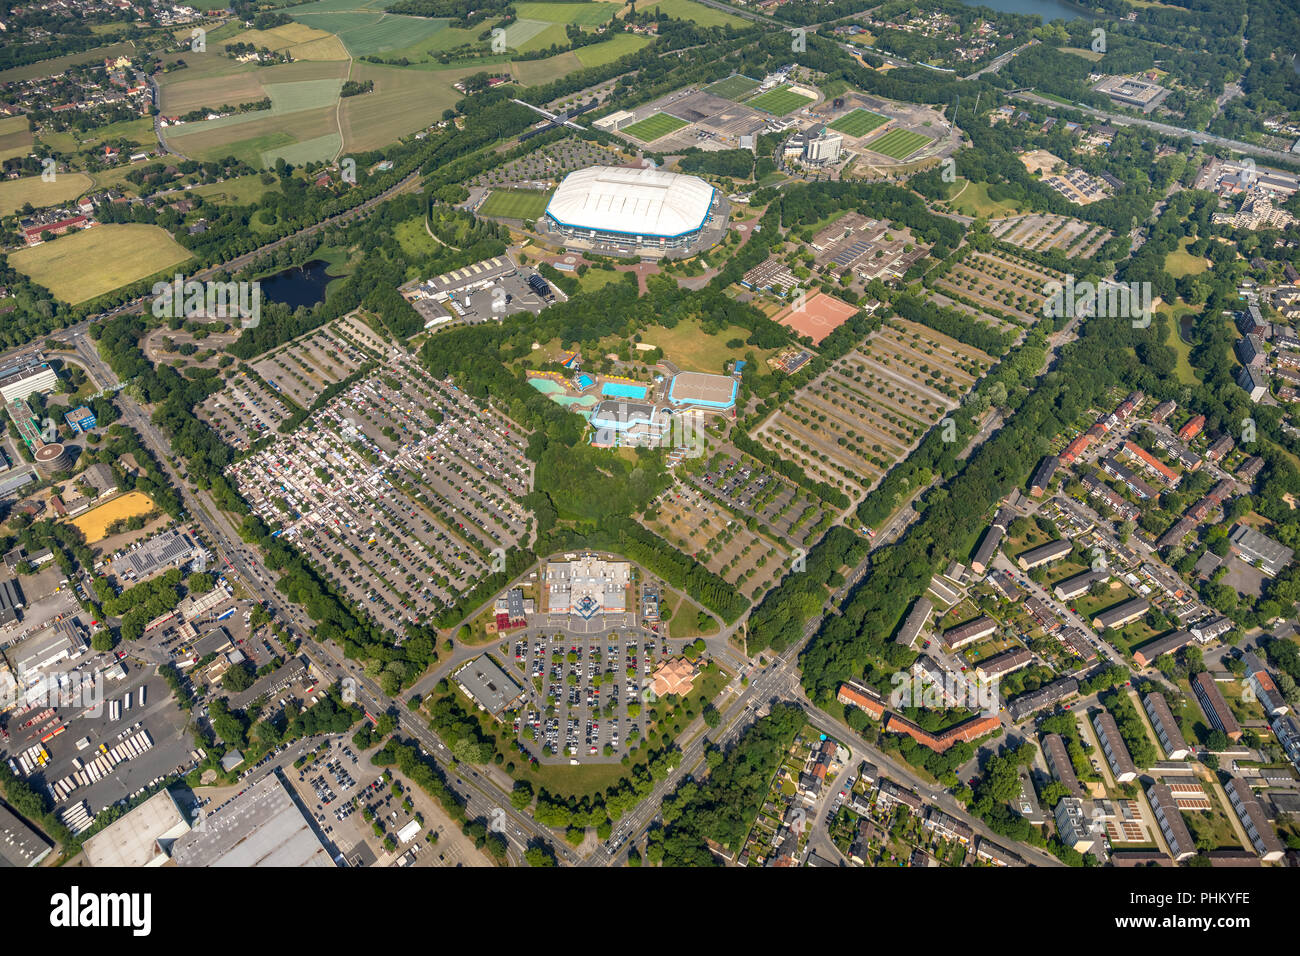 Vista aerea, Parco Arena Gelsenkirchen, Veltins-Arena, Arena AufSchalke di Gelsenkirchen è lo stadio di calcio tedesco del club di calcio FC Schalke 04, Foto Stock